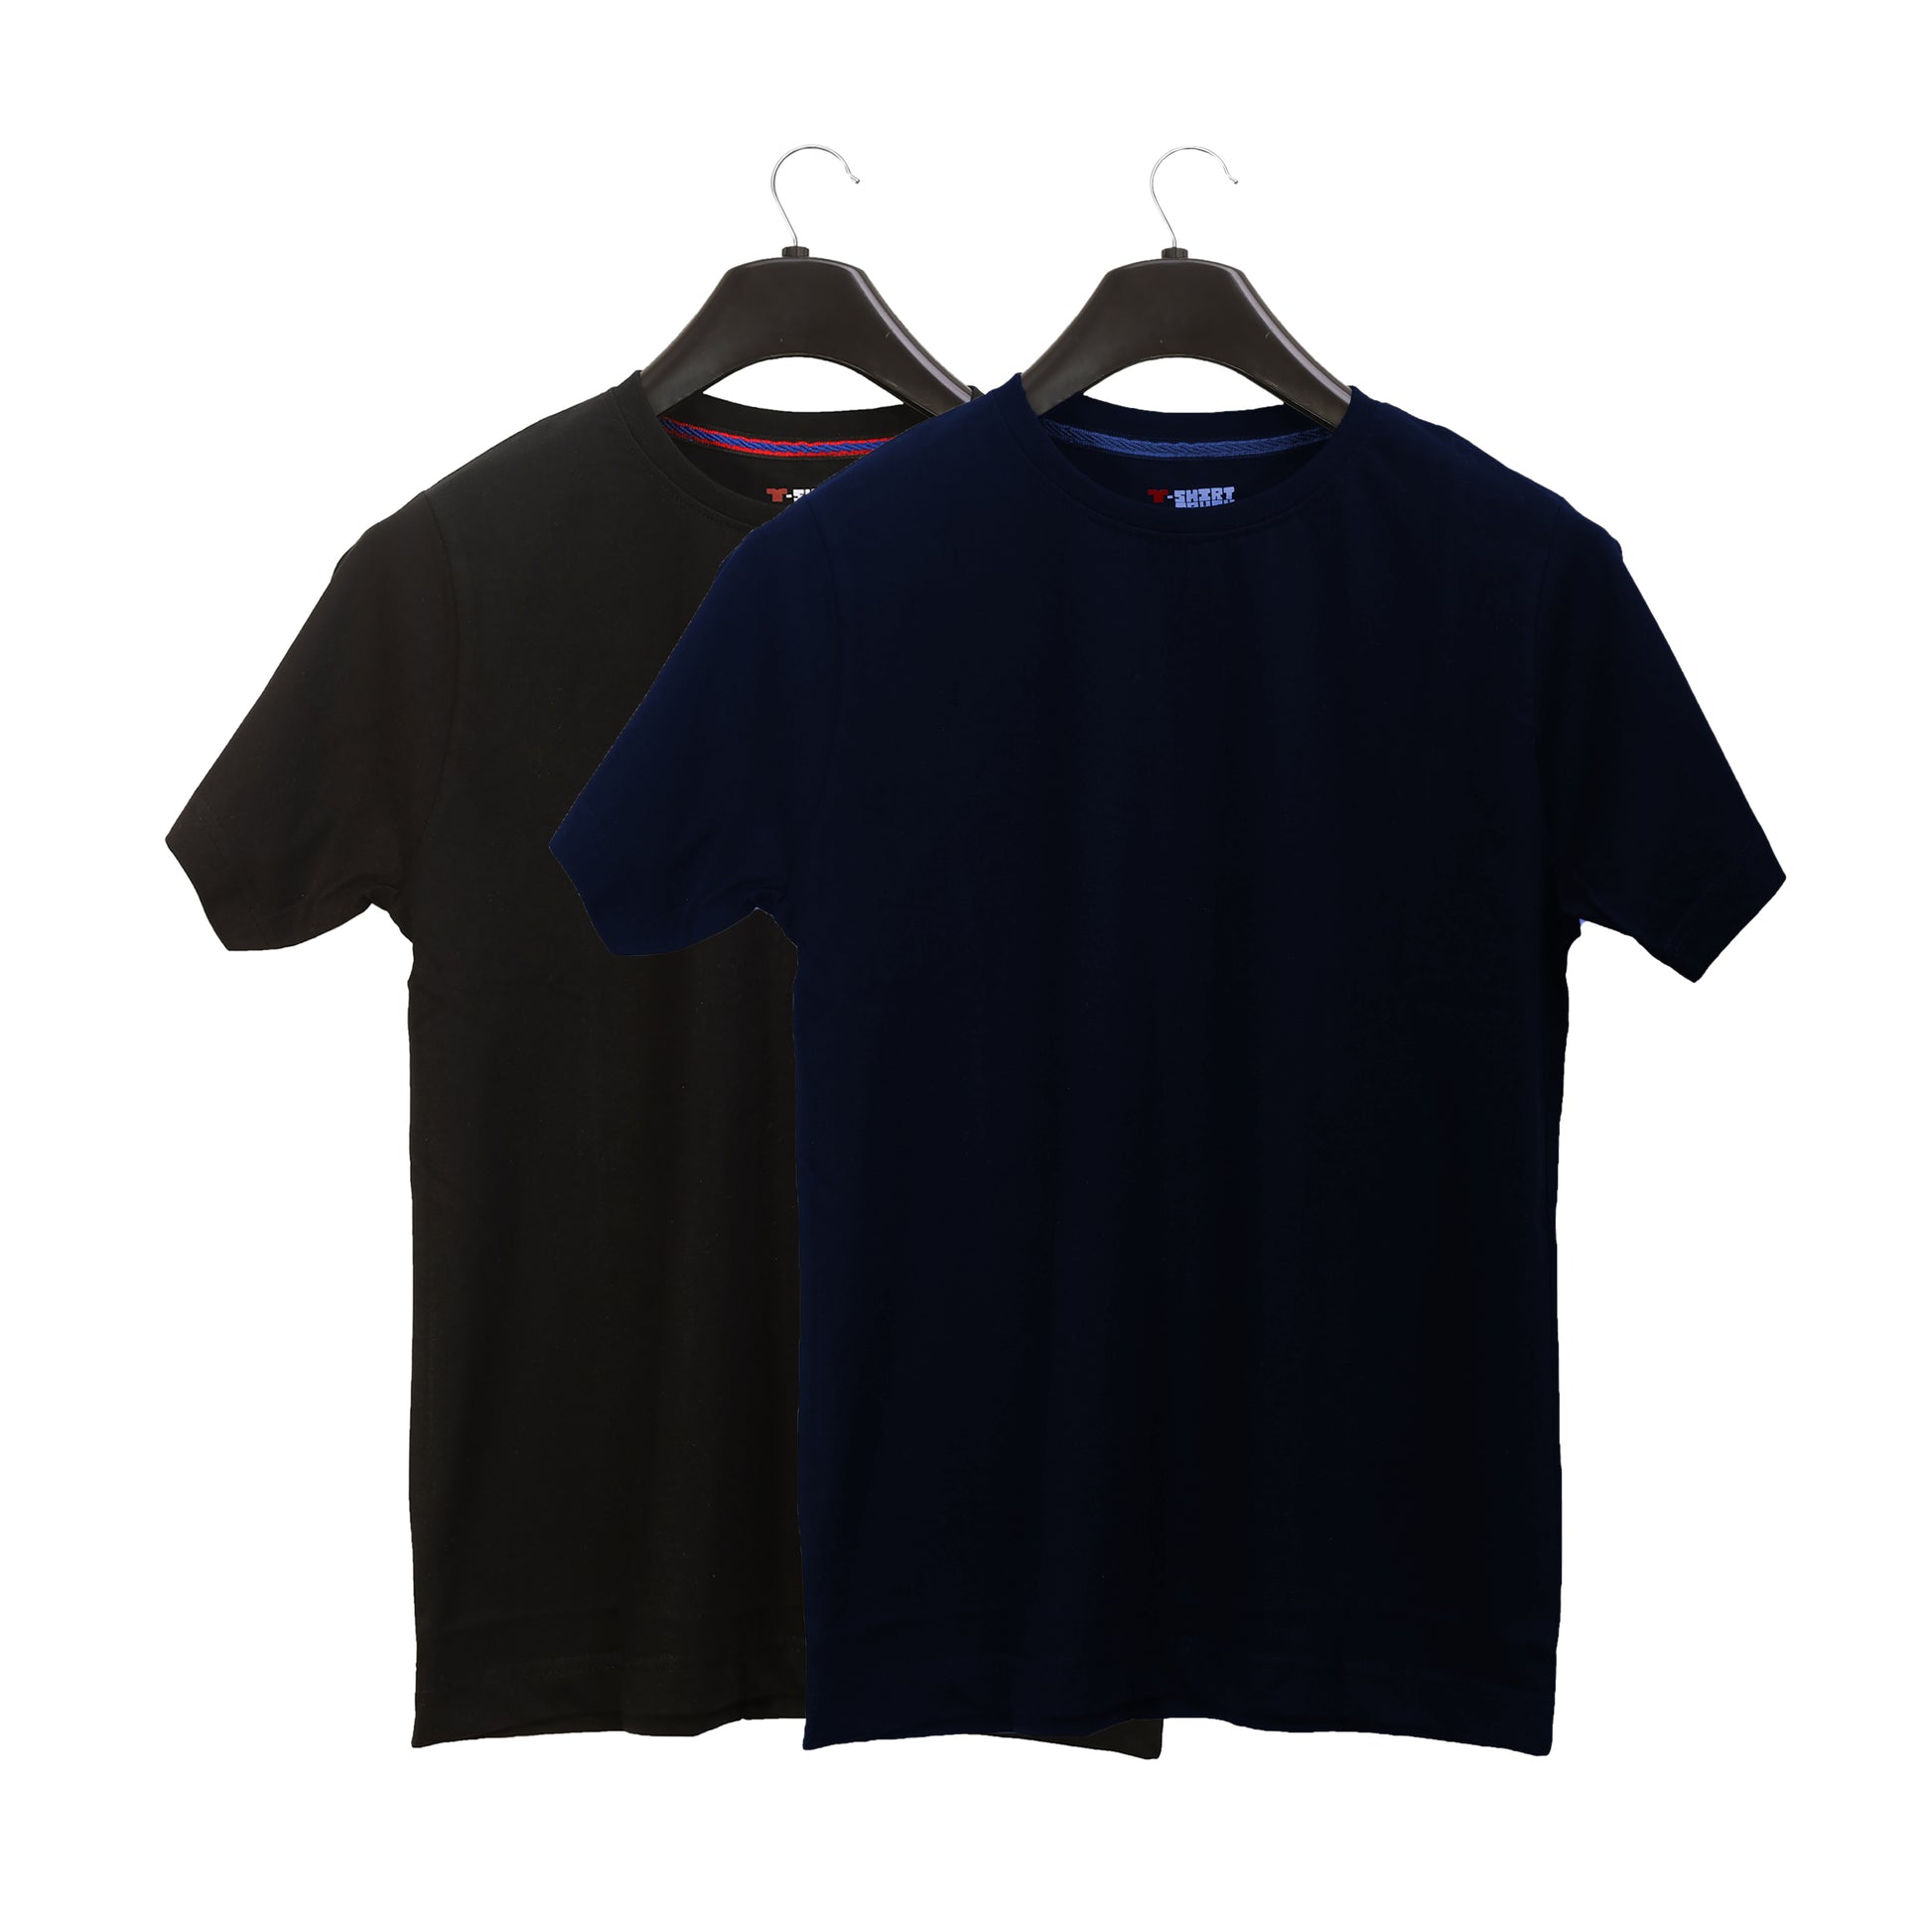 Unisex Round Neck Plain Solid Combo Pack of 2 T-shirts Black & Blue